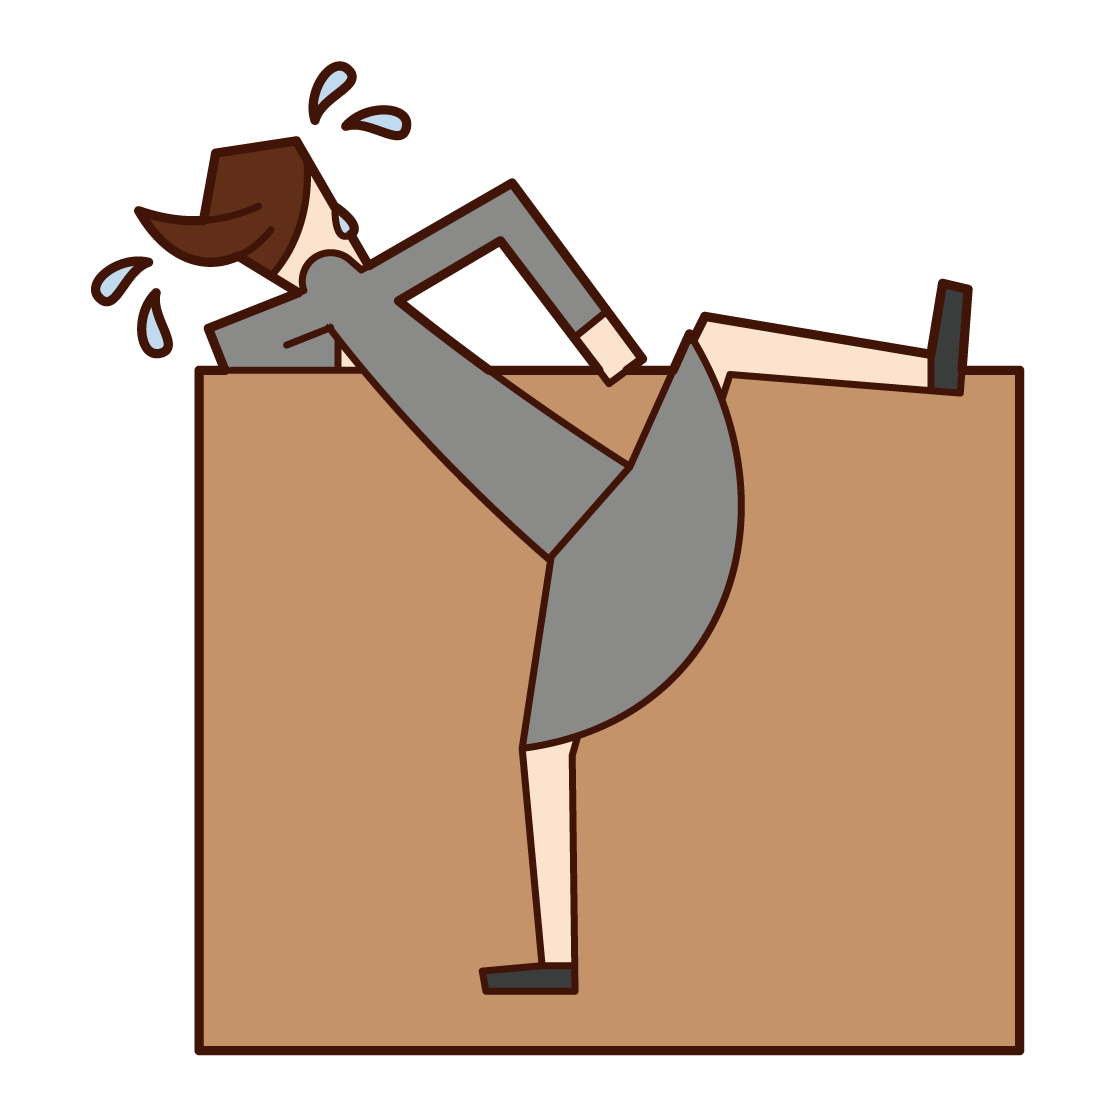 Illustration of a woman climbing a wall